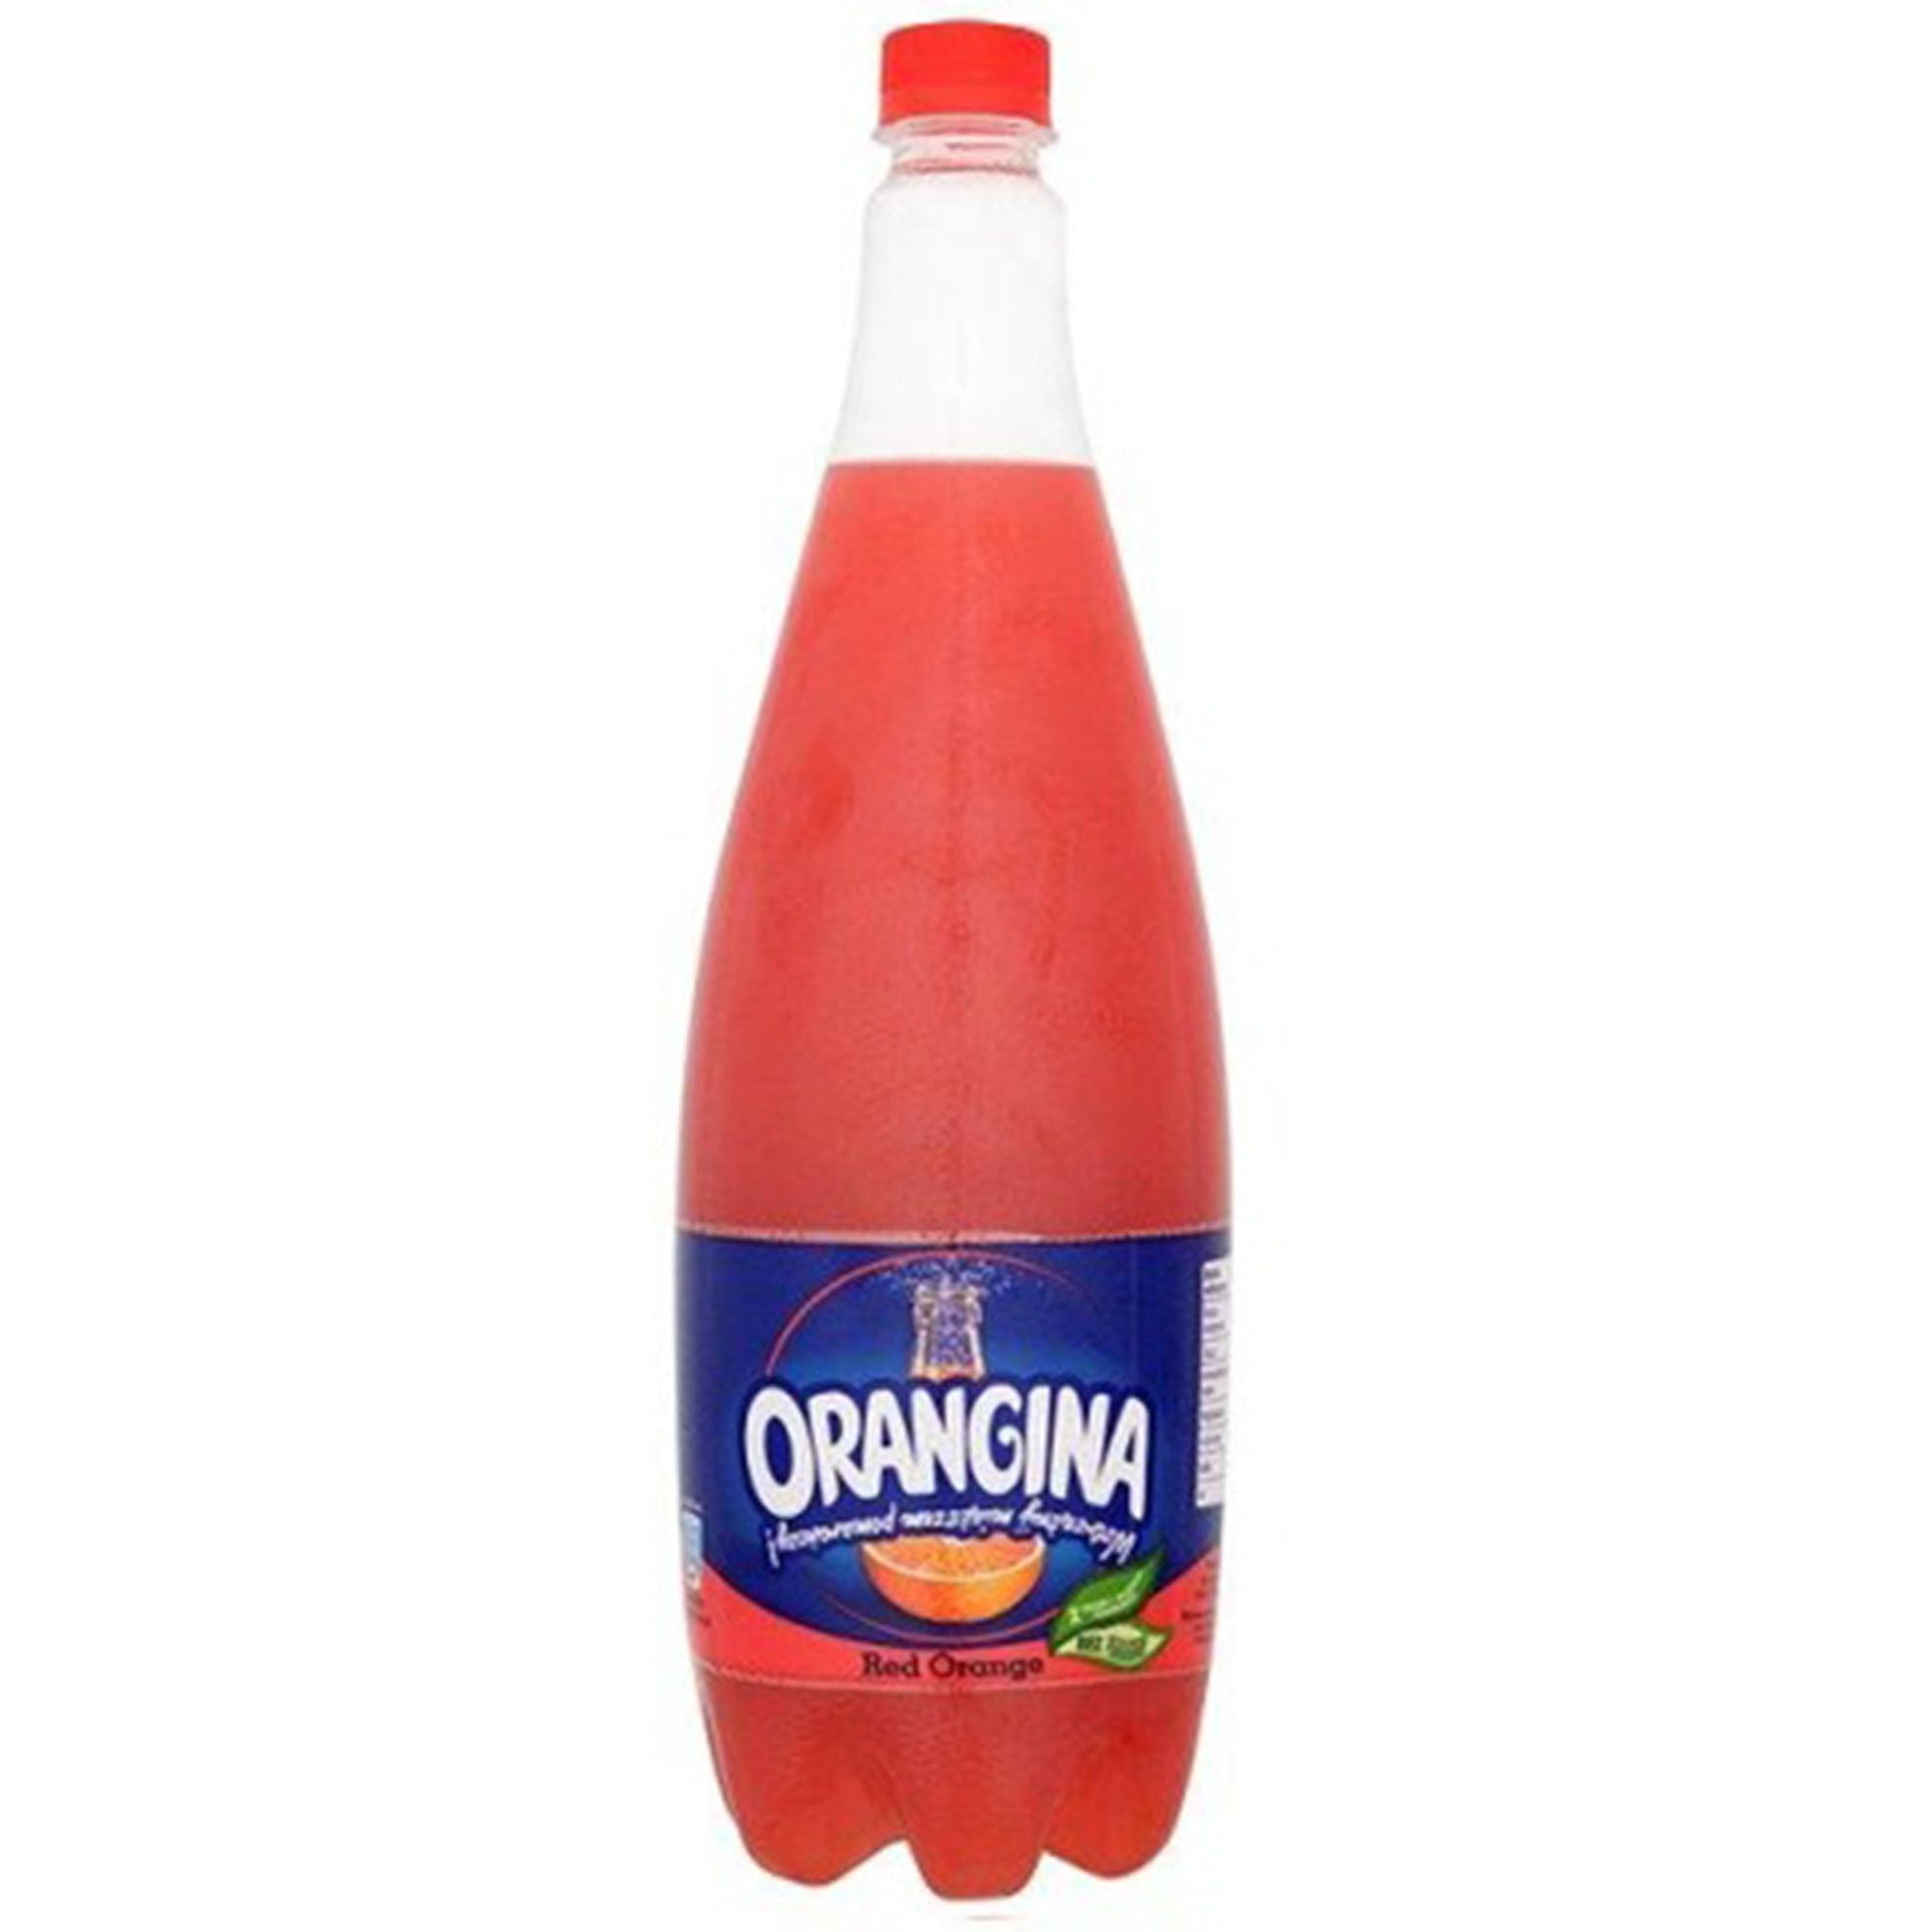 Orangina Blood Orange 1.4L